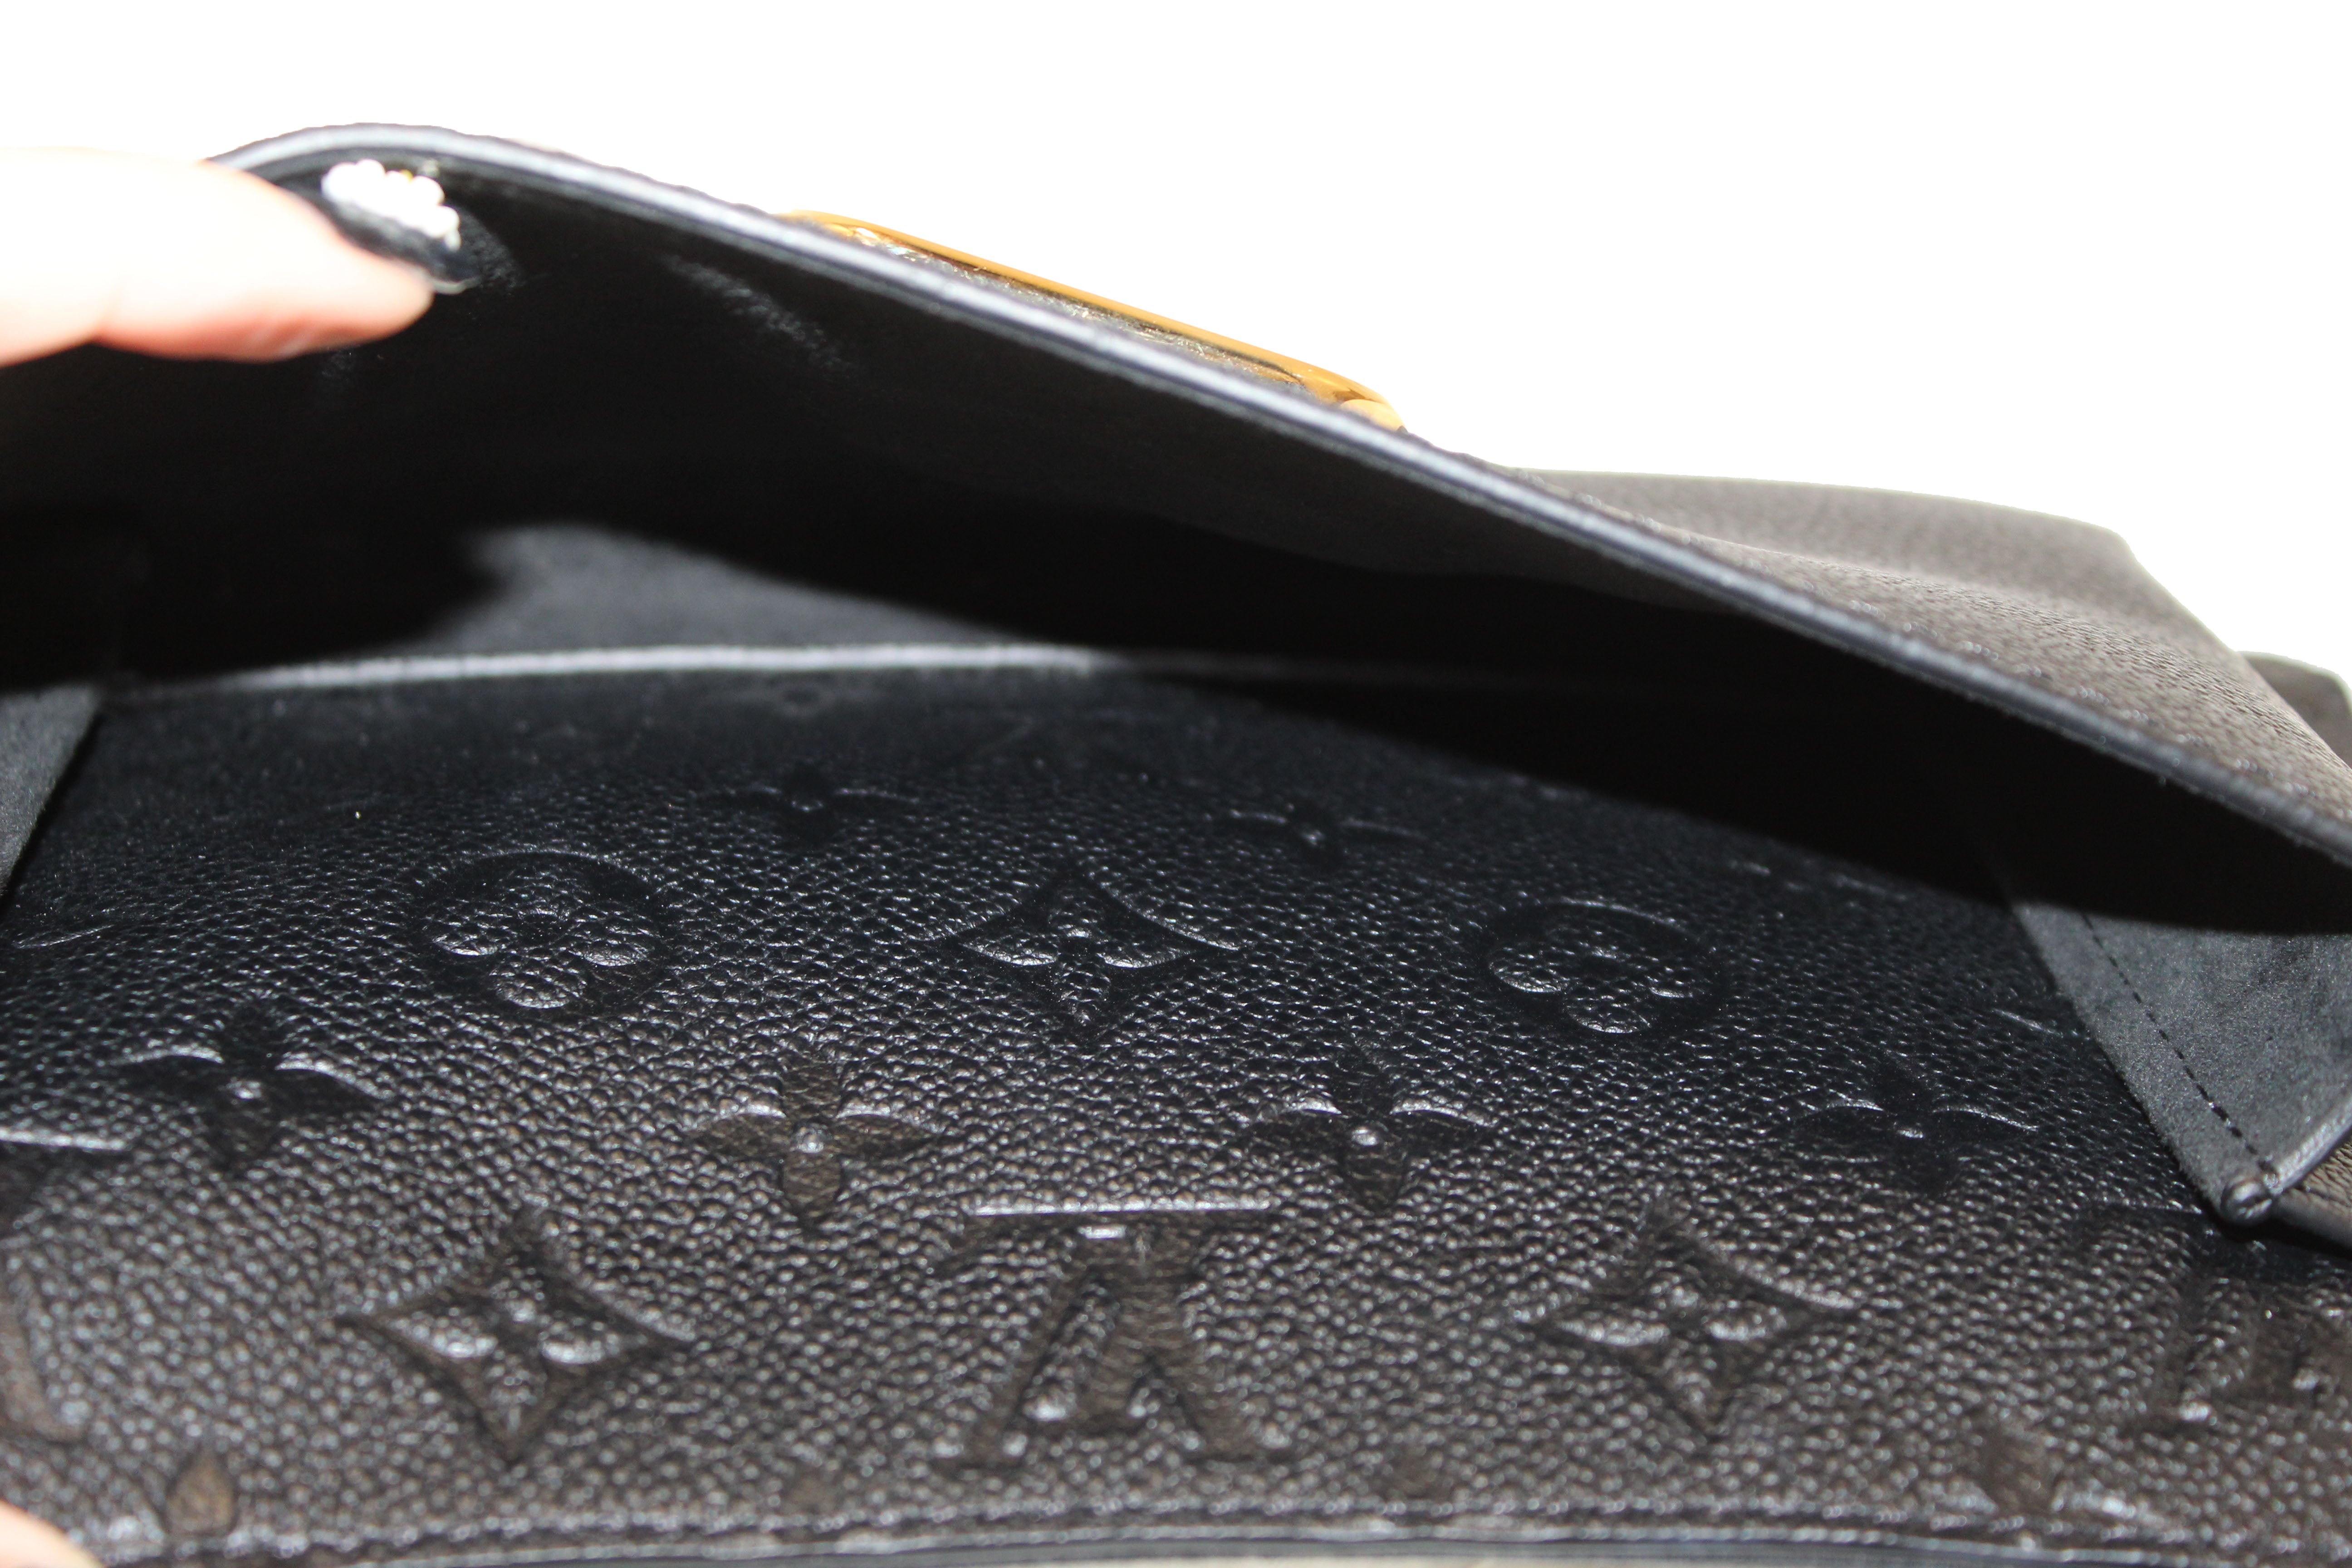 LOUIS VUITTON Vavin PM Monogram Empreinte Leather Shoulder Bag Black